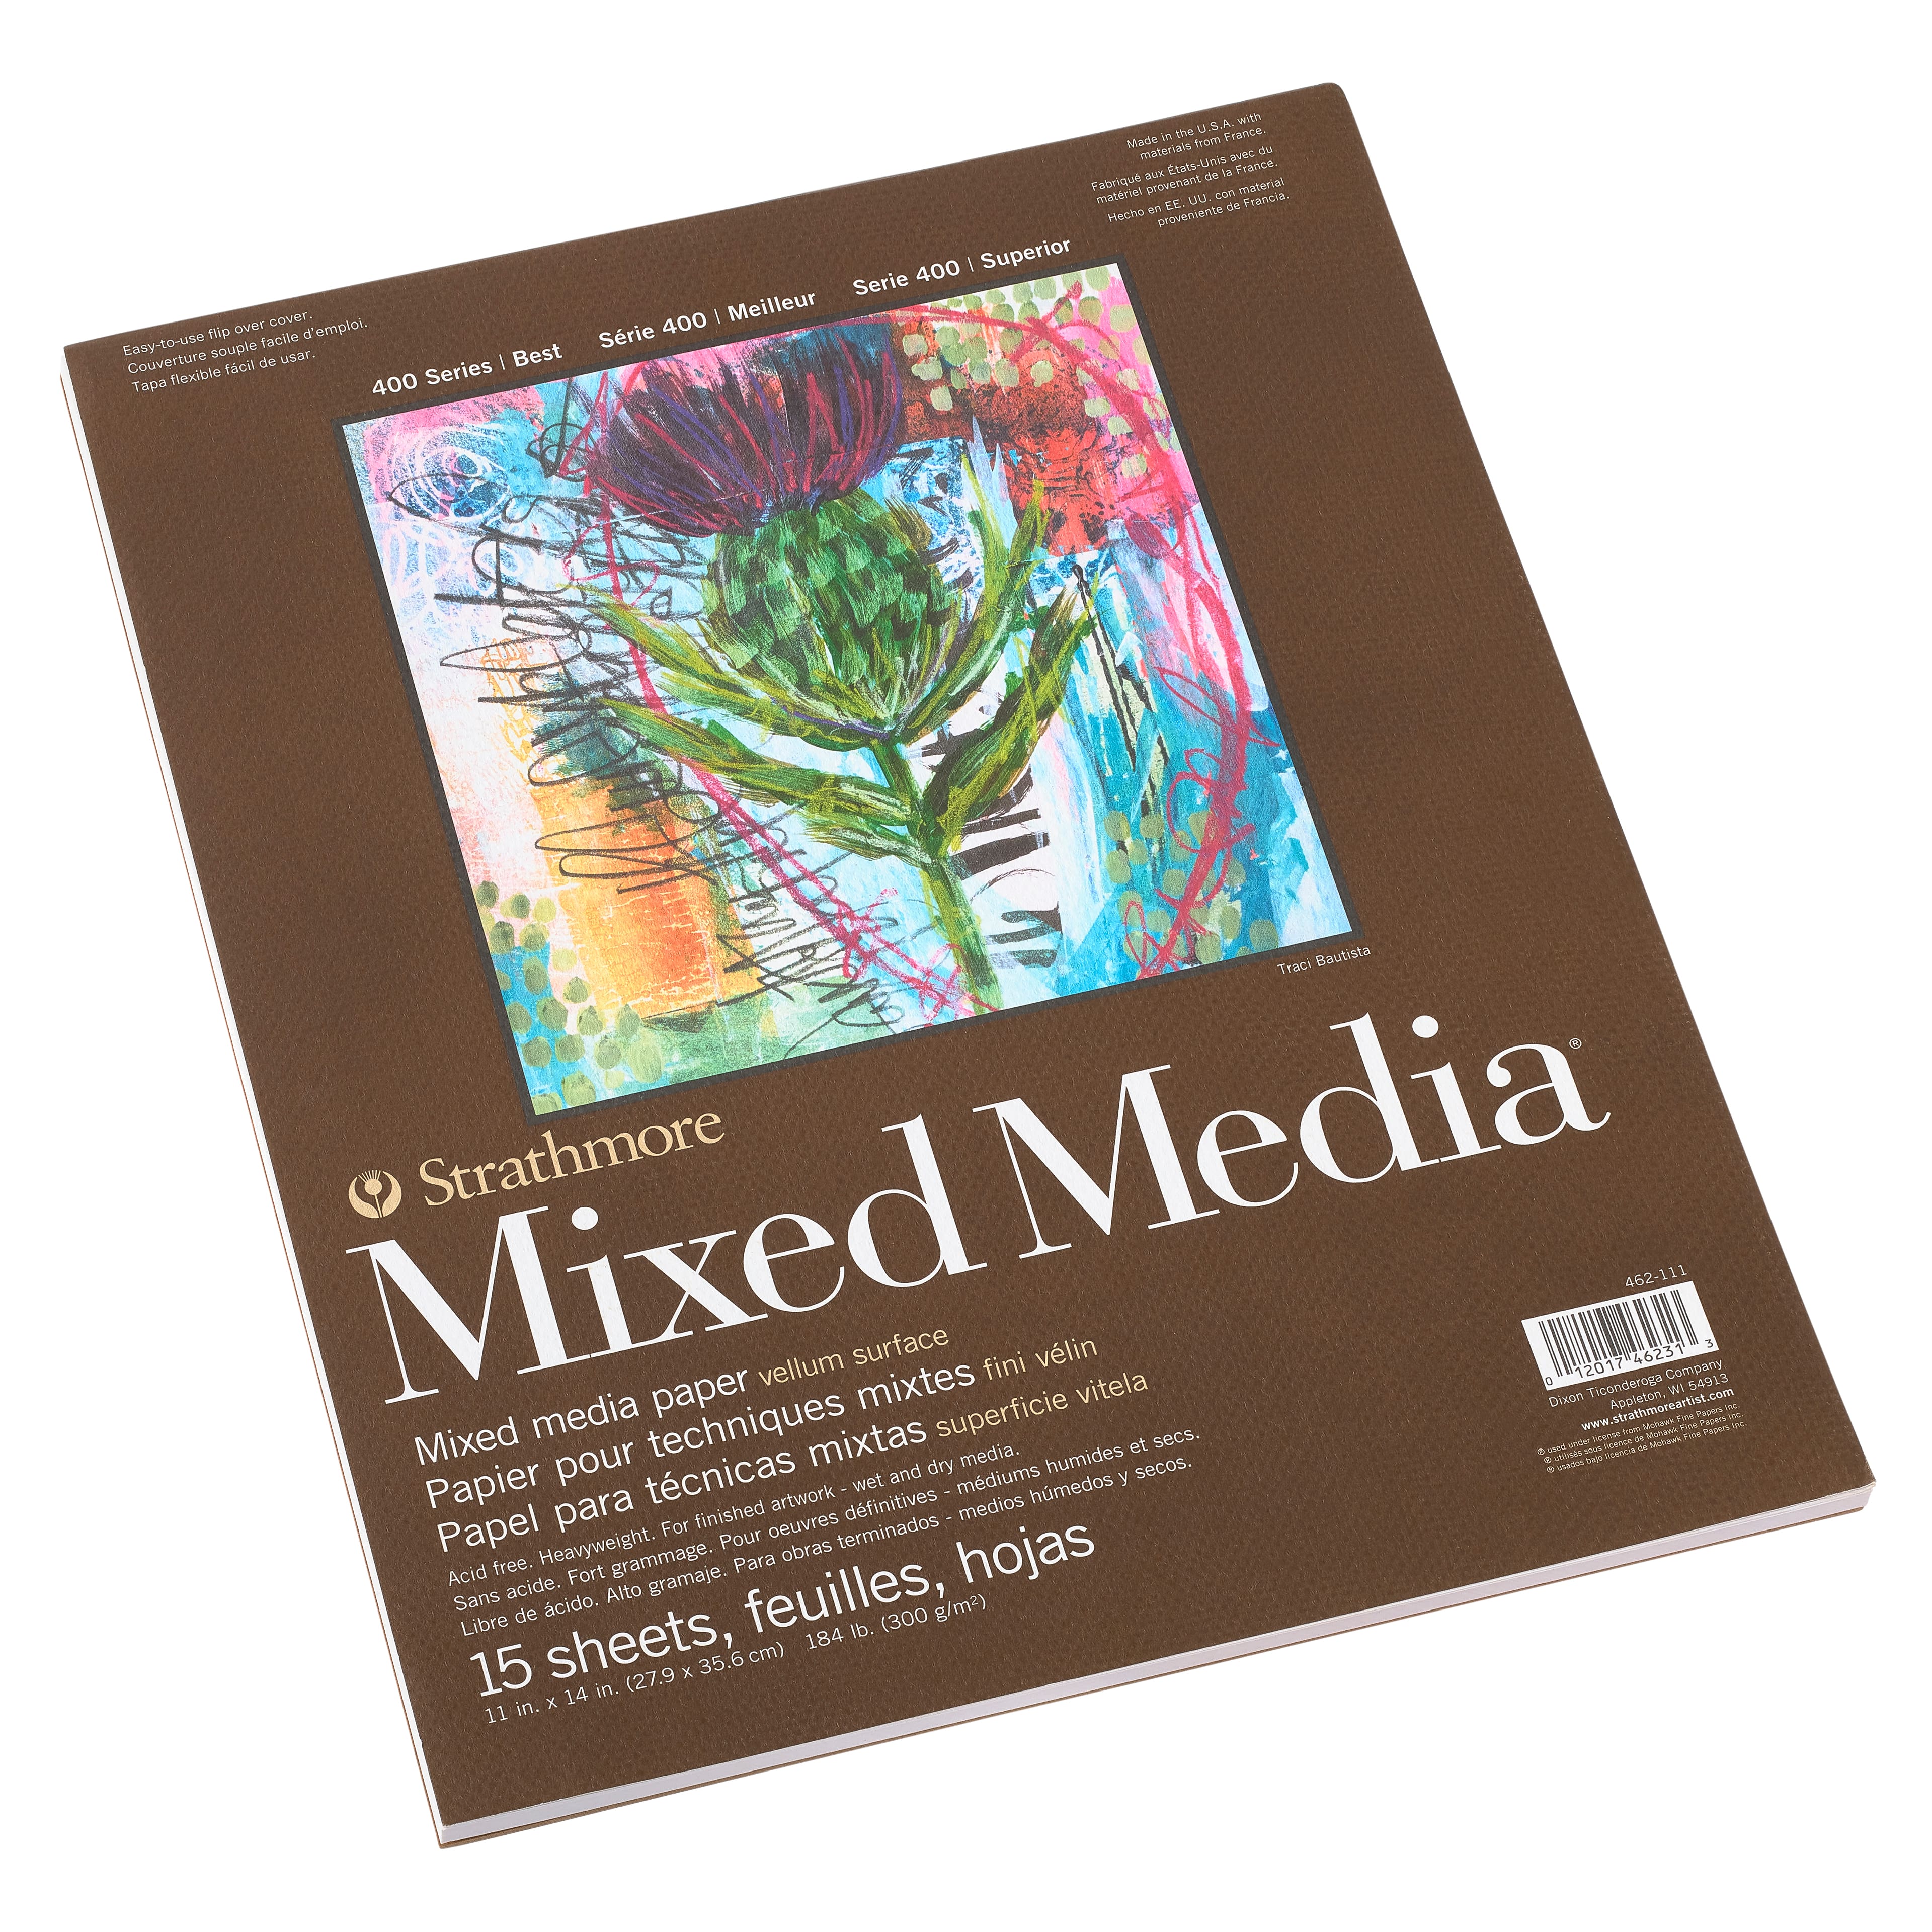 Strathmore 400 Toned Tan Mixed Media Pad, 15 Sheets, 18” x 24